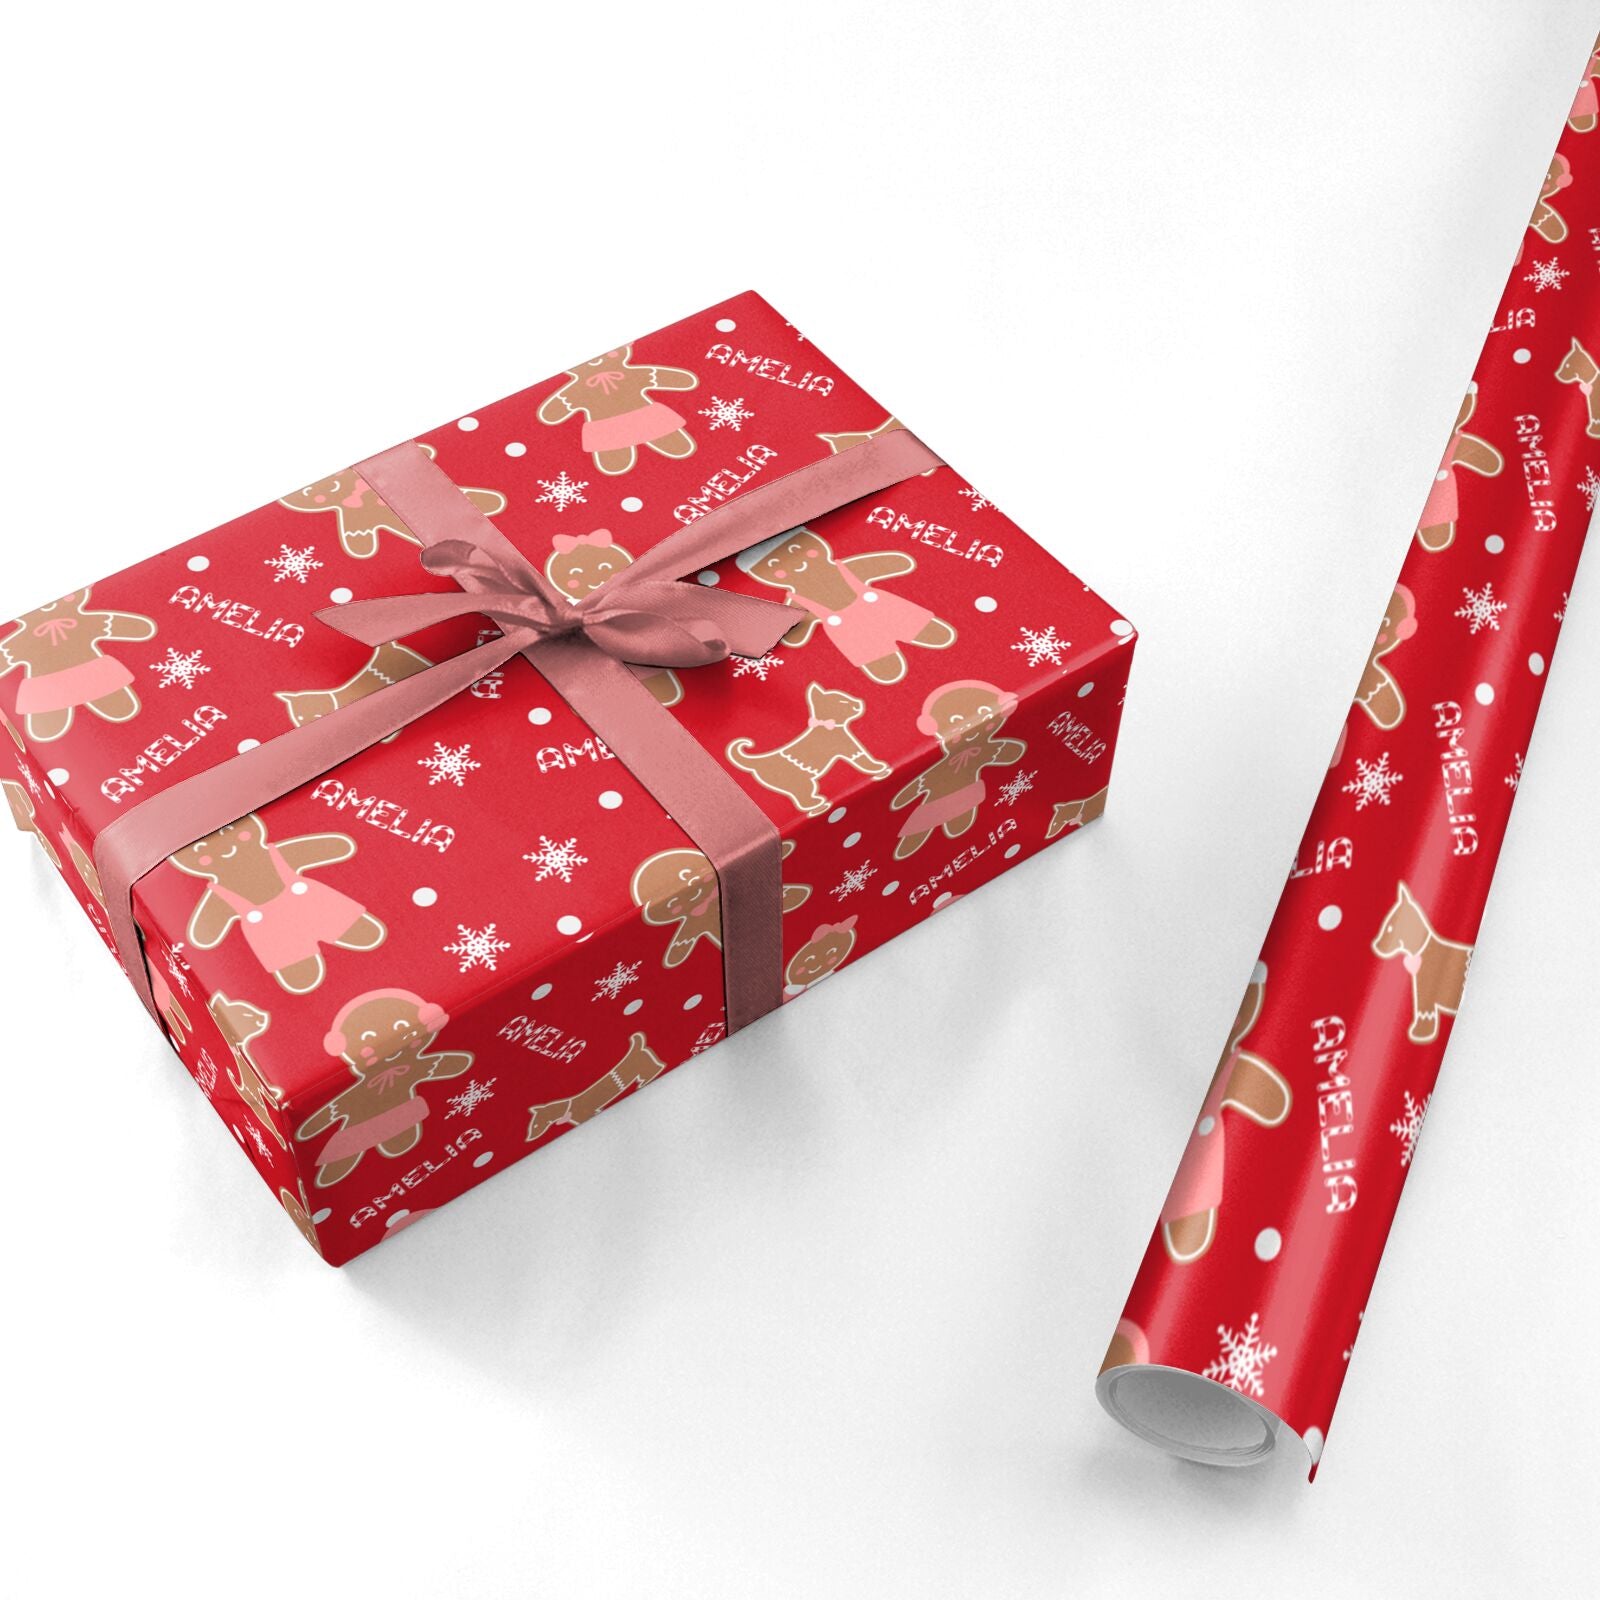 Papier d'emballage (3 feuilles) - Chats festifs